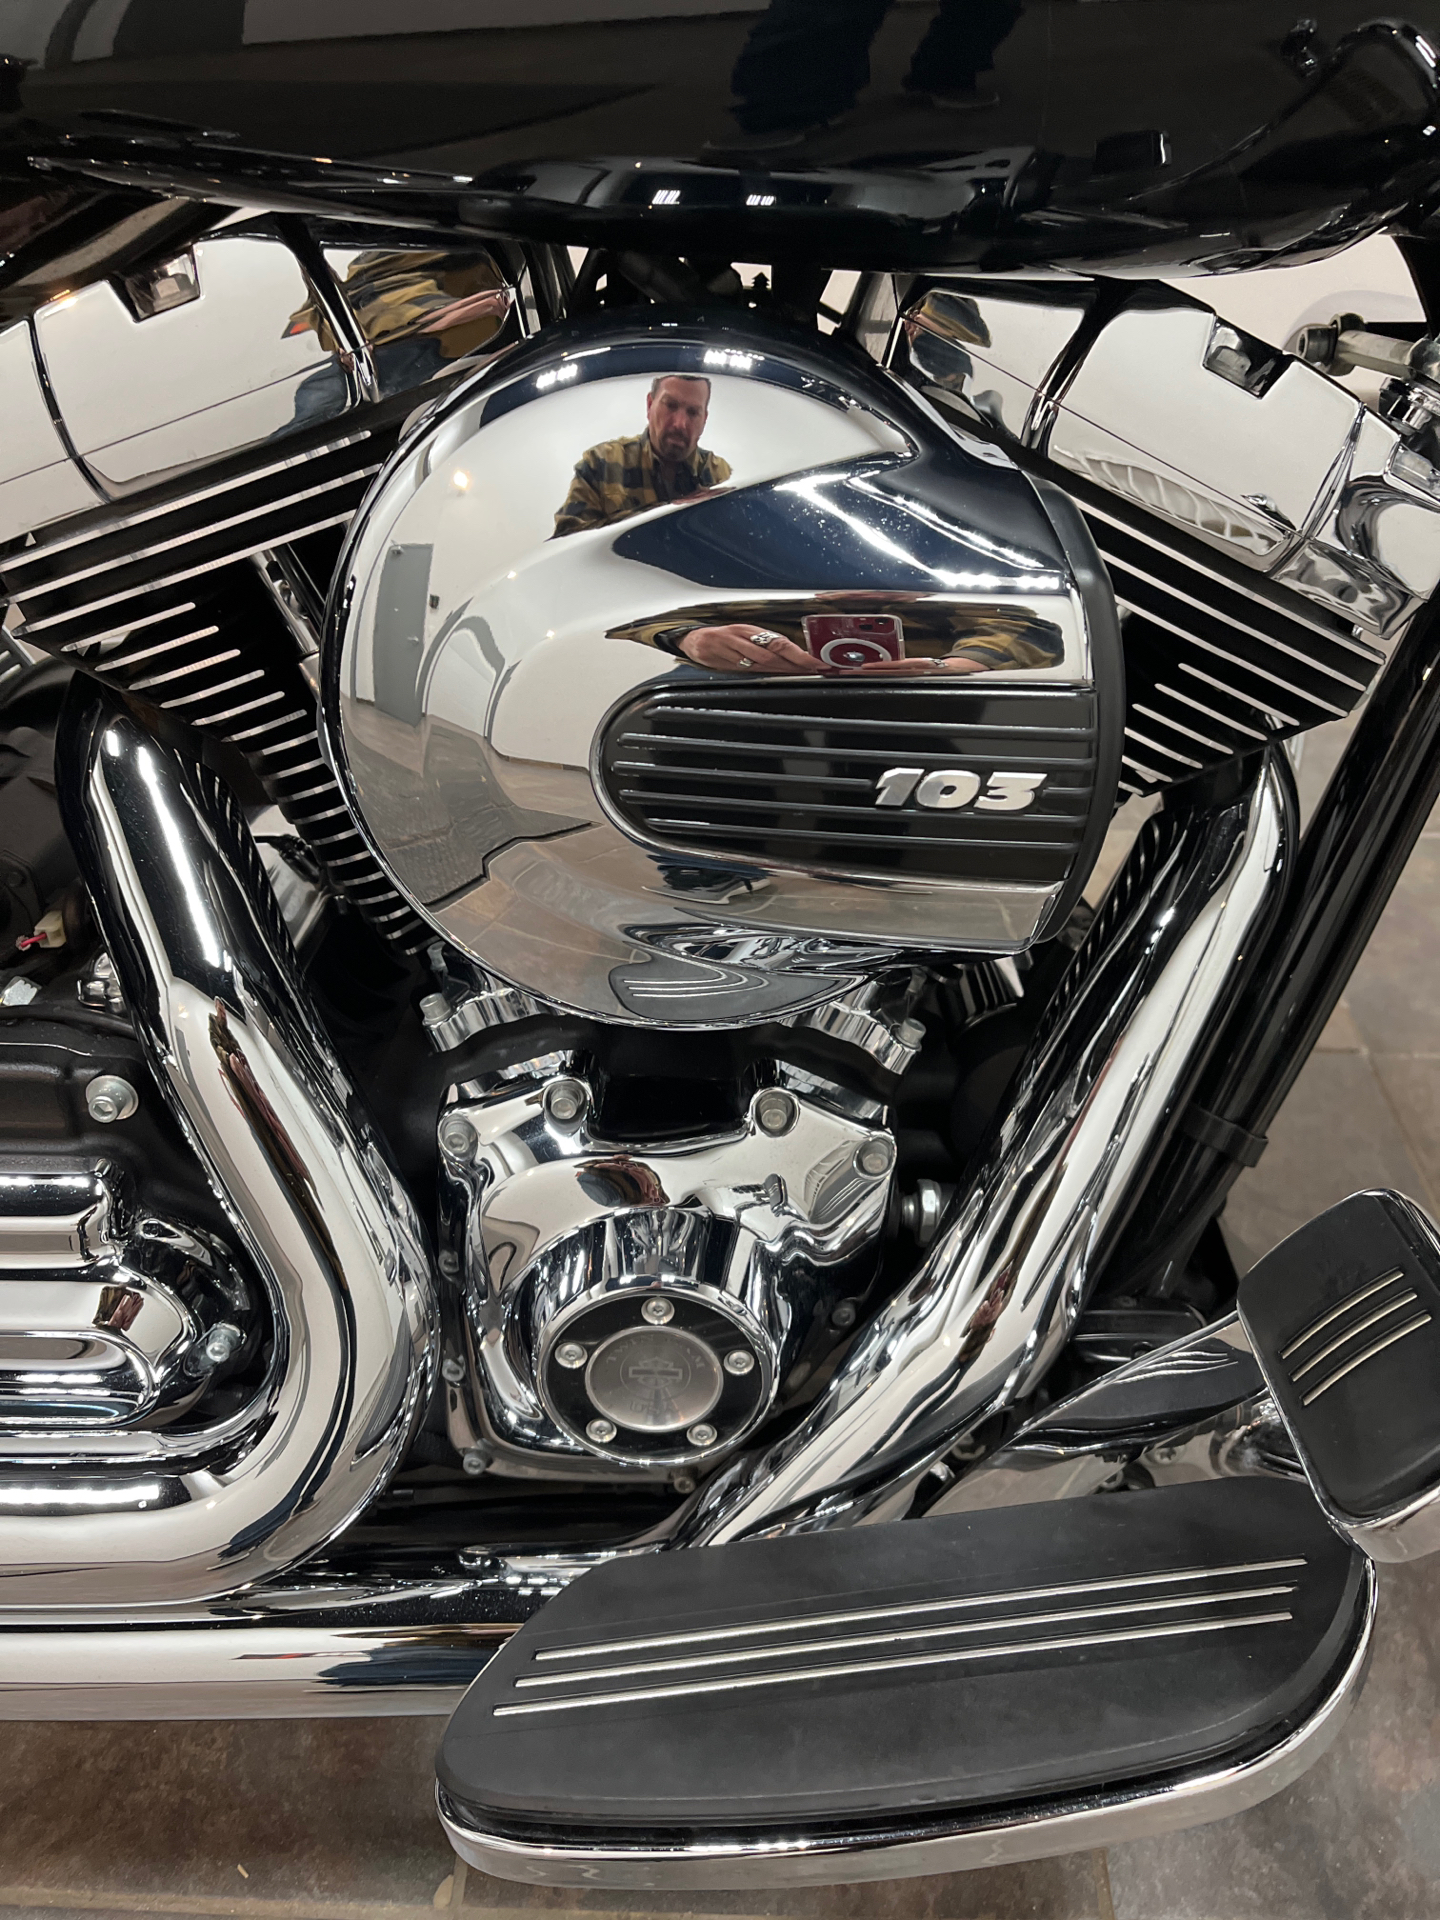 2015 Harley-Davidson Street Glide® Special in Alexandria, Minnesota - Photo 8